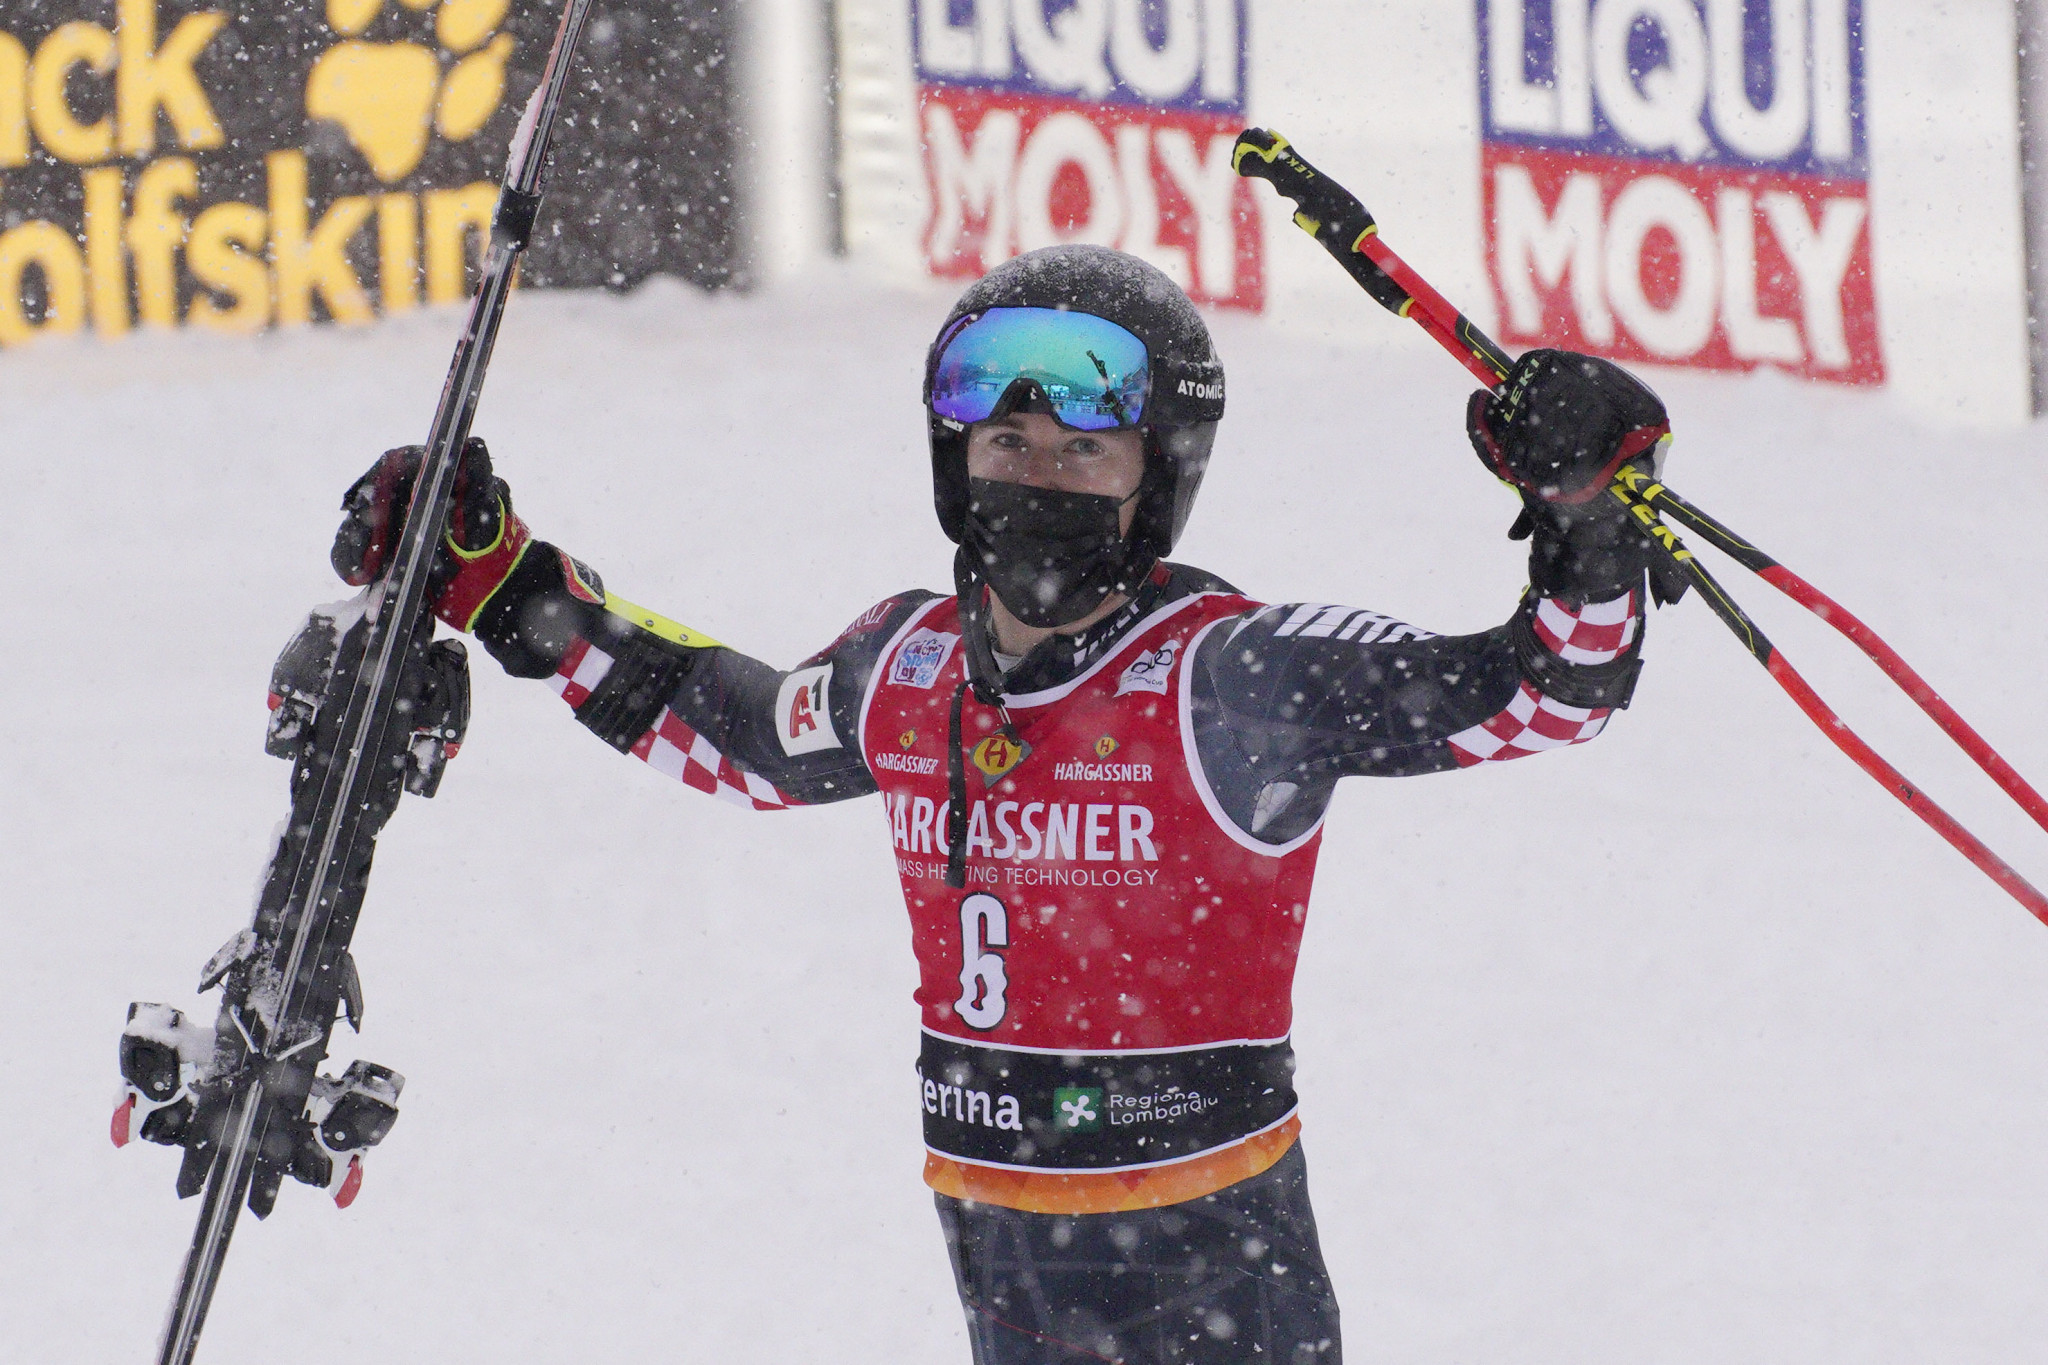 Zubčić fights back in Santa Caterina to take World Cup giant slalom victory